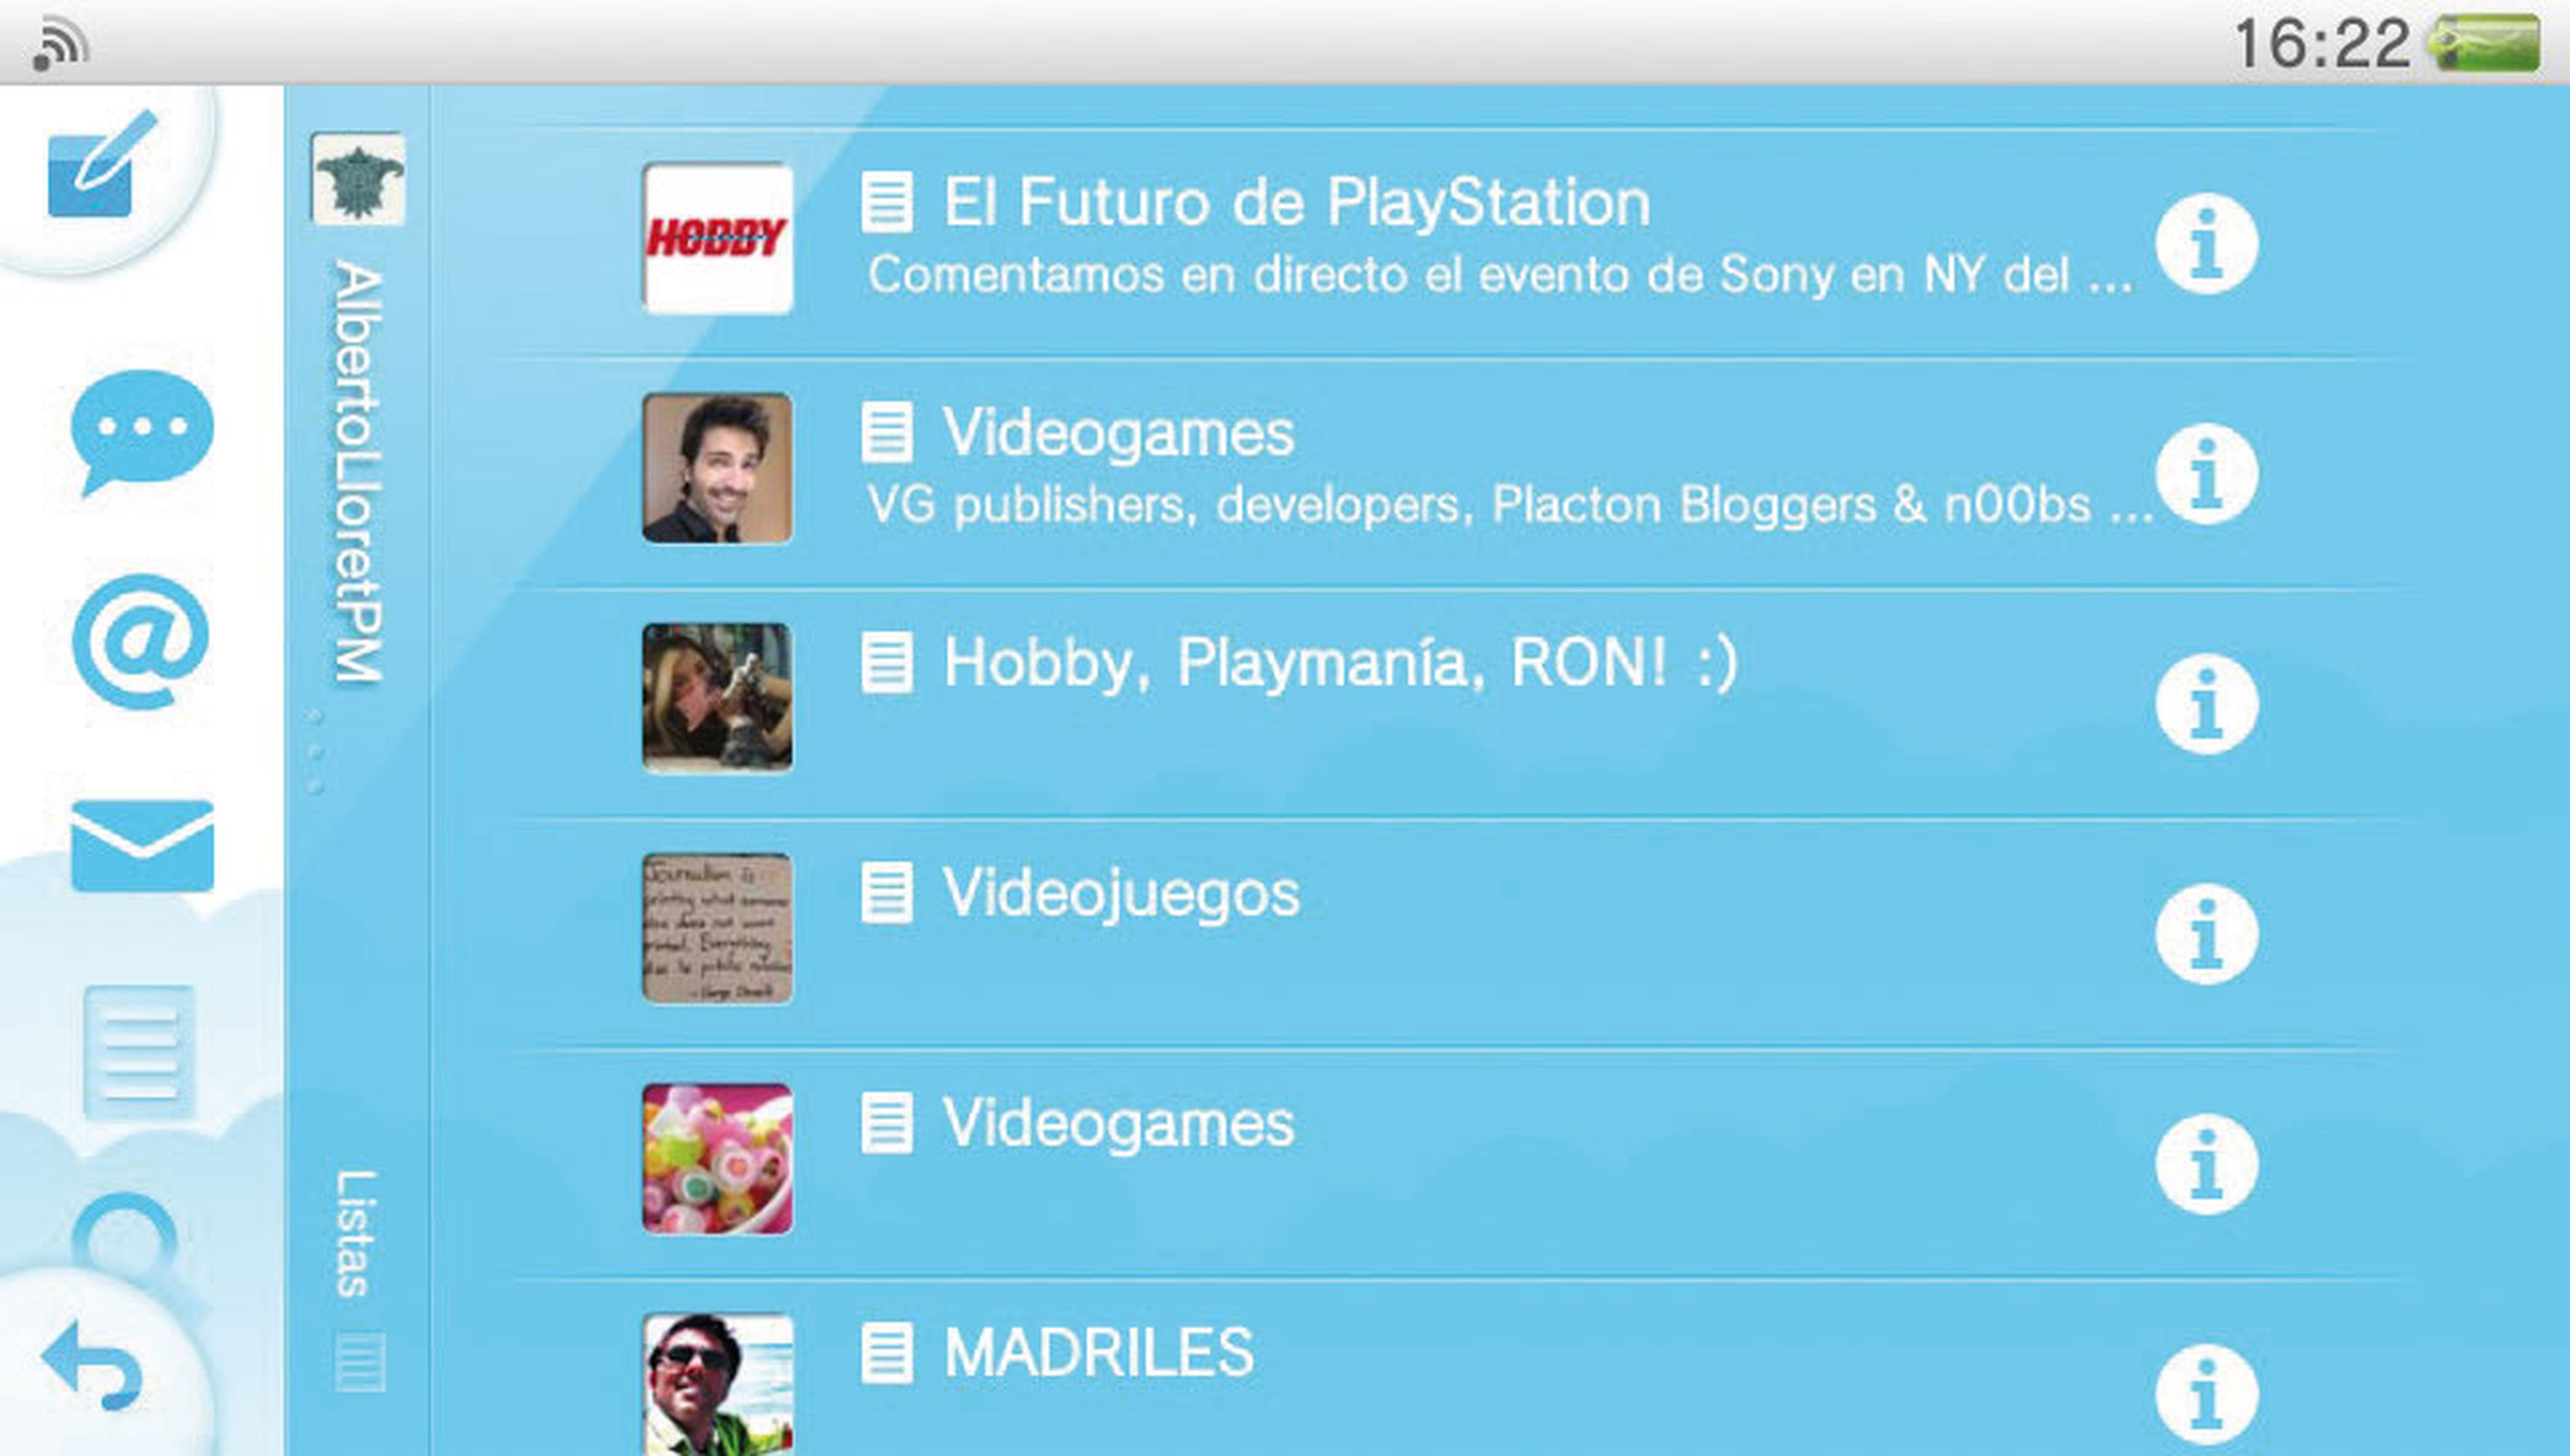 PS Vita: presente y futuro